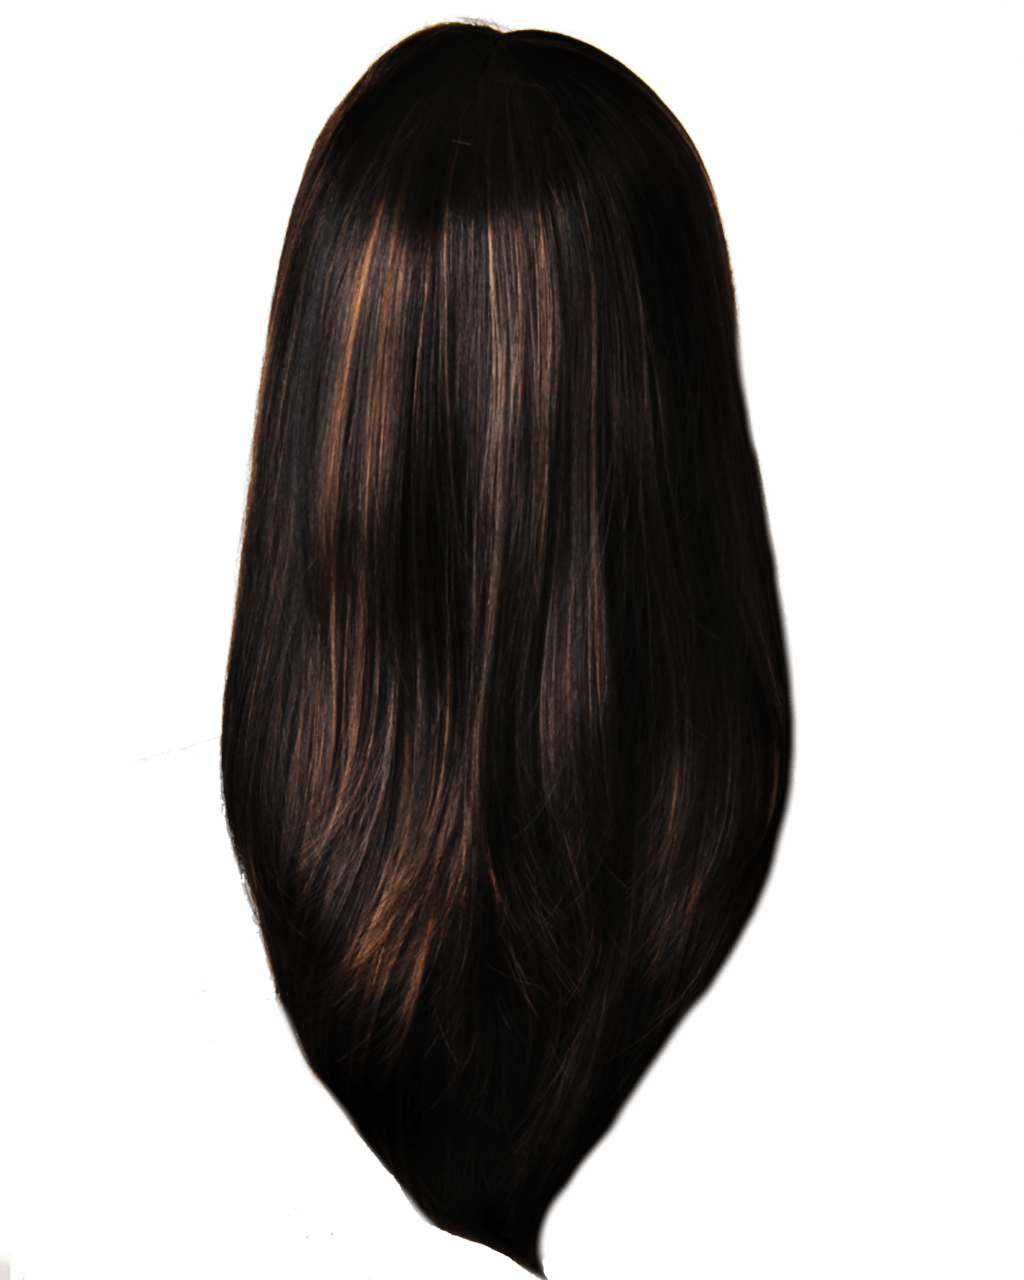 Women Hair Png Image PNG Image